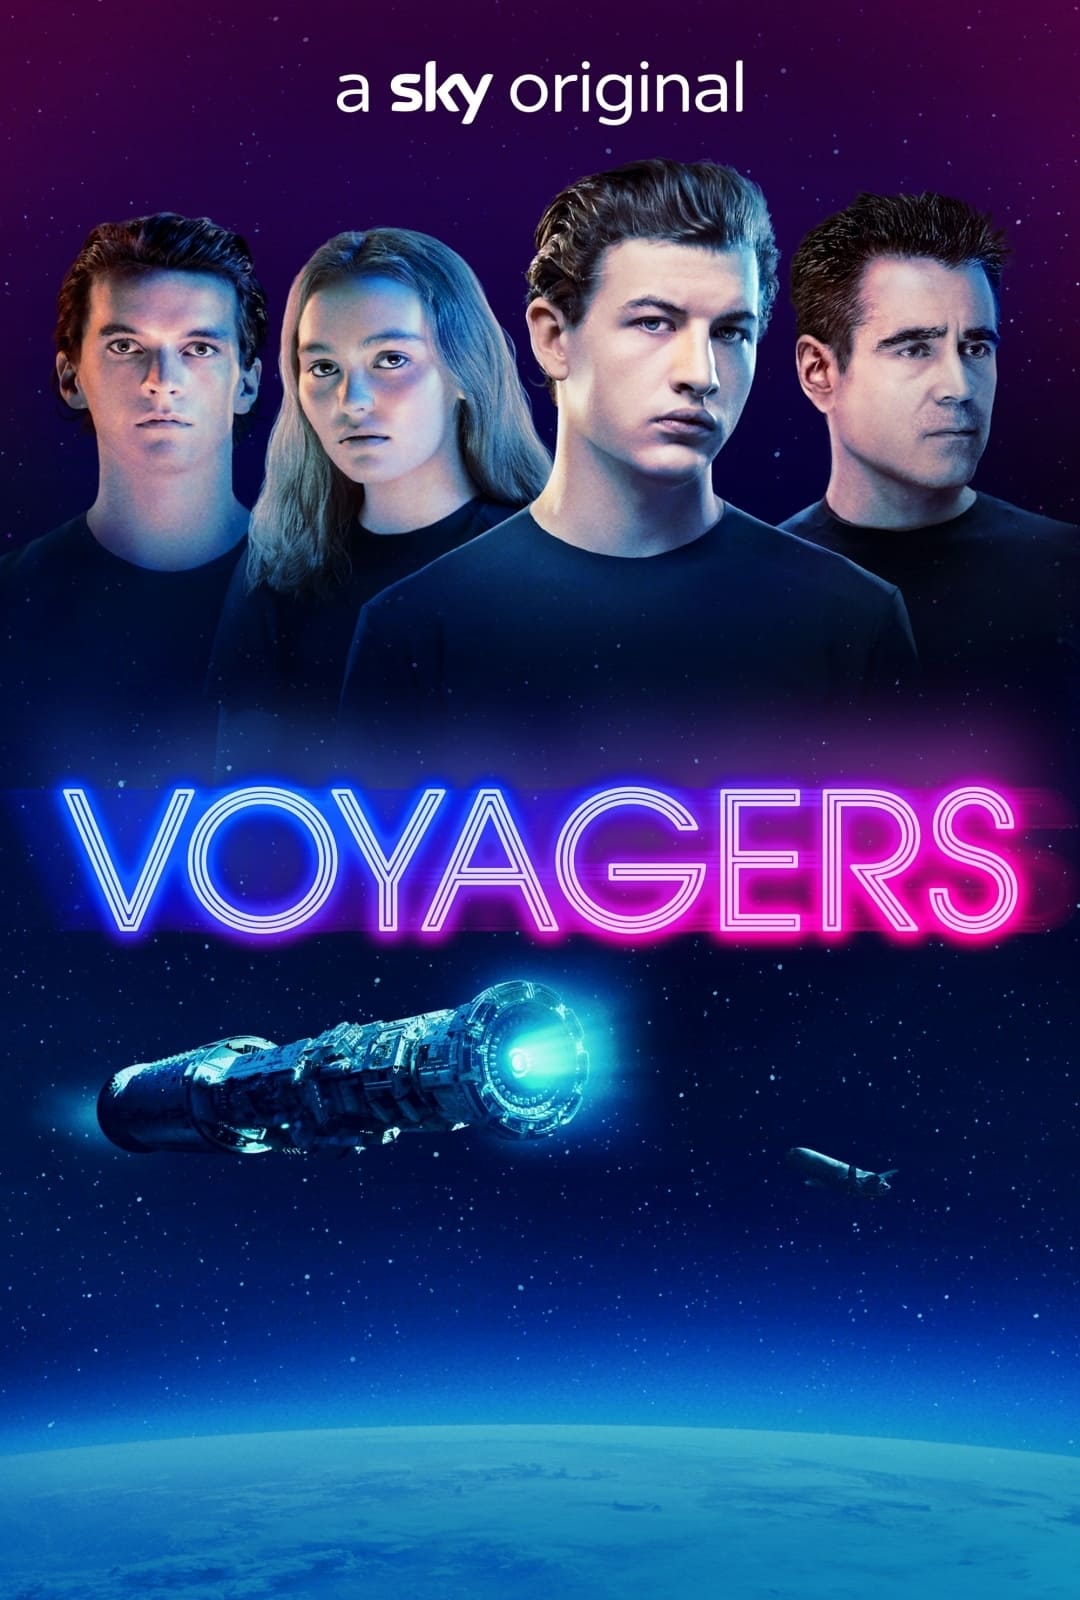 voyagers movie sequel